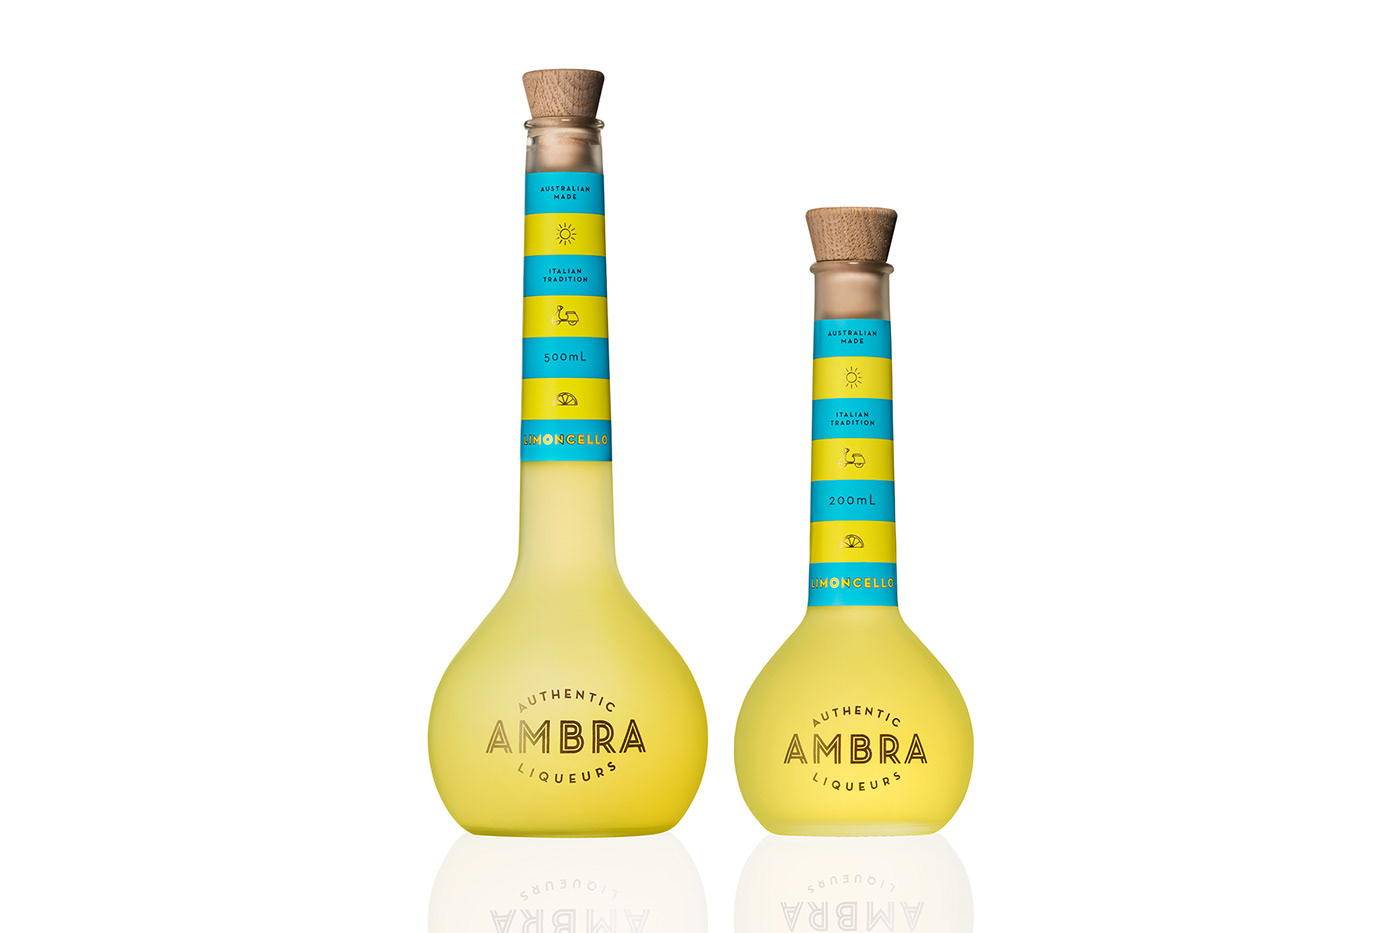 Ambra Liqueurs on Behance